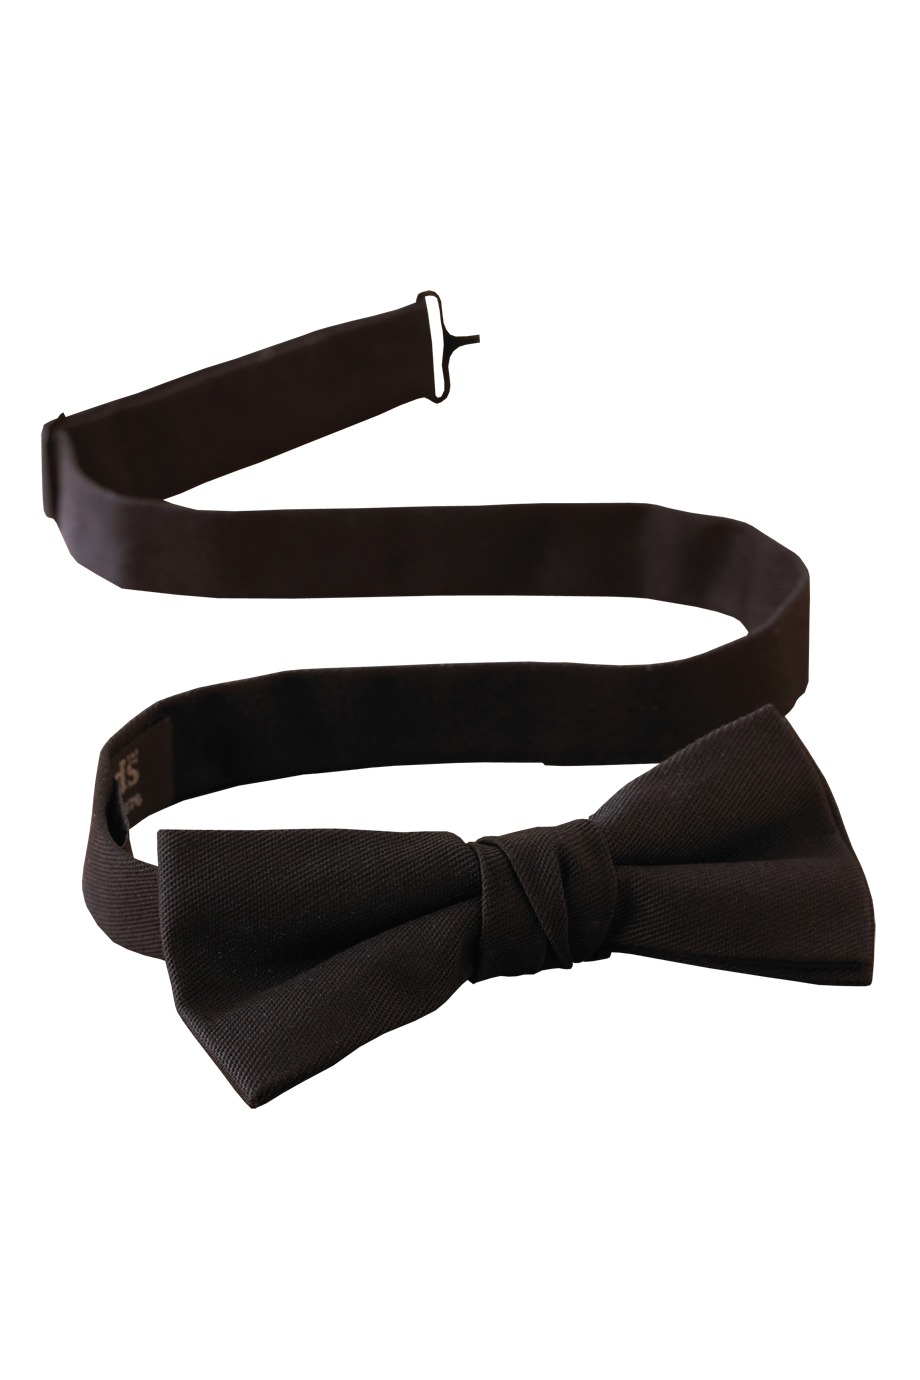 Edwards Garment BT10 Bow Tie